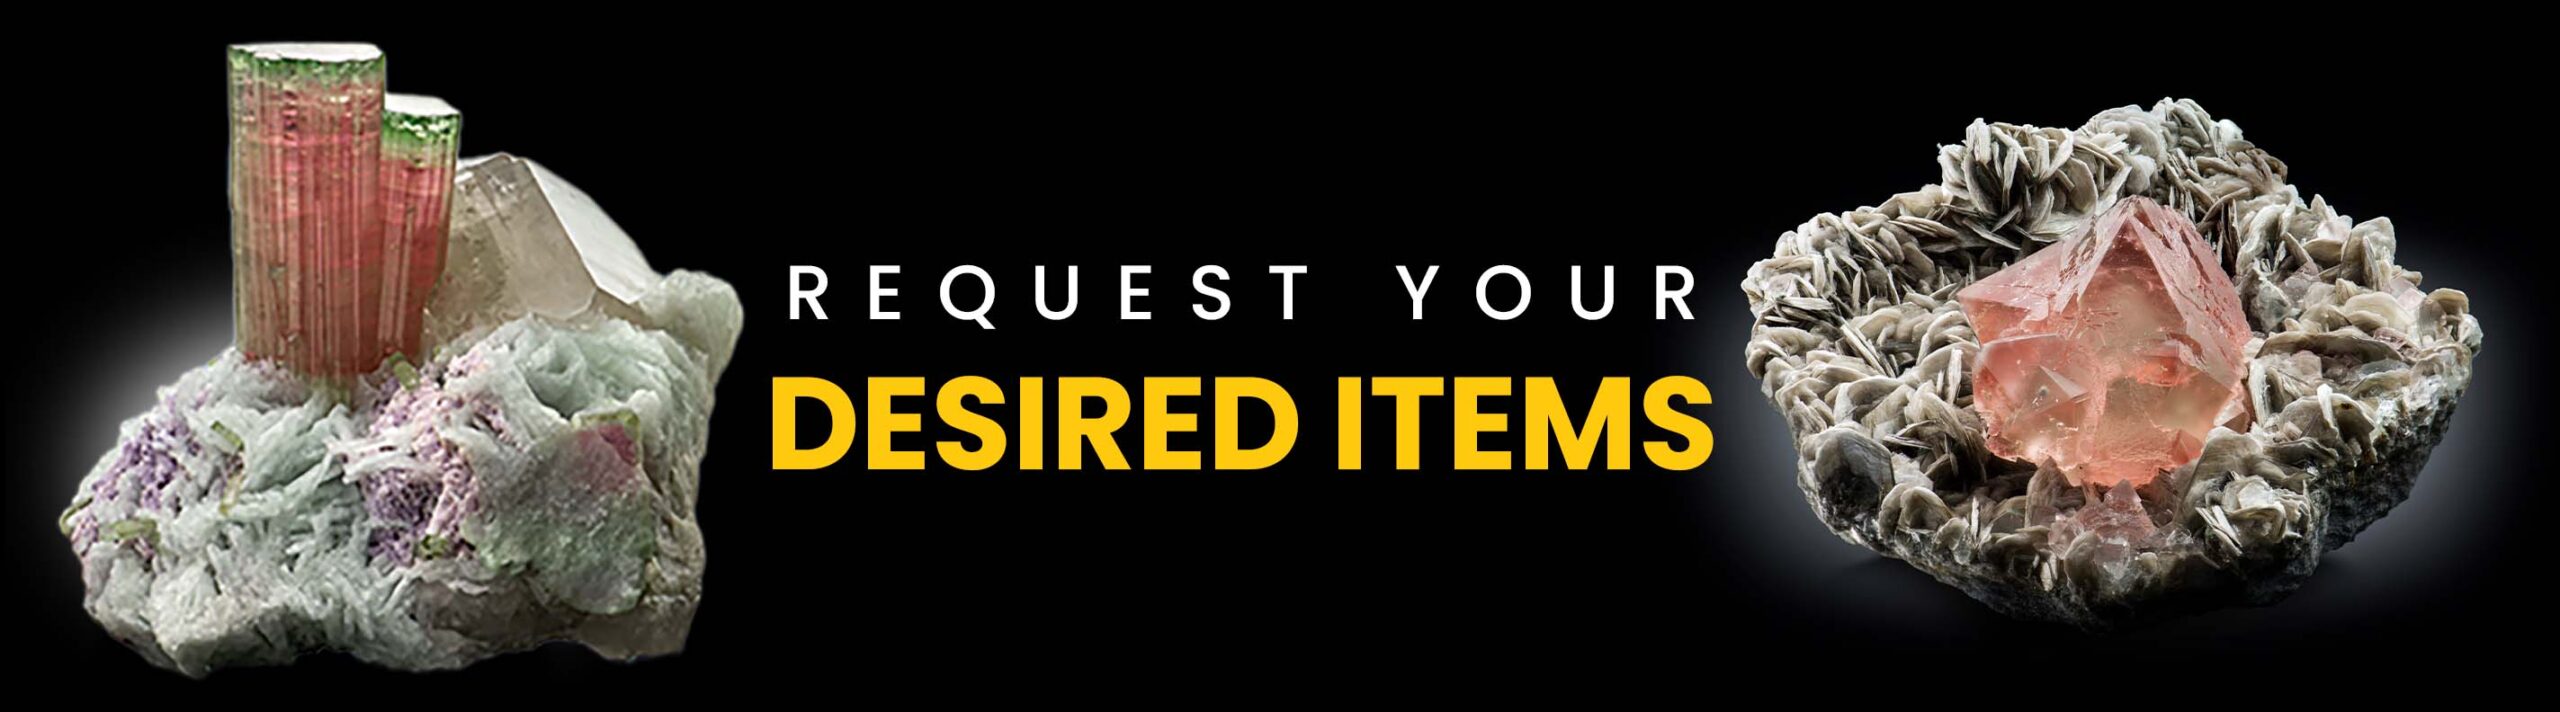 Request Your Desired Items desktop